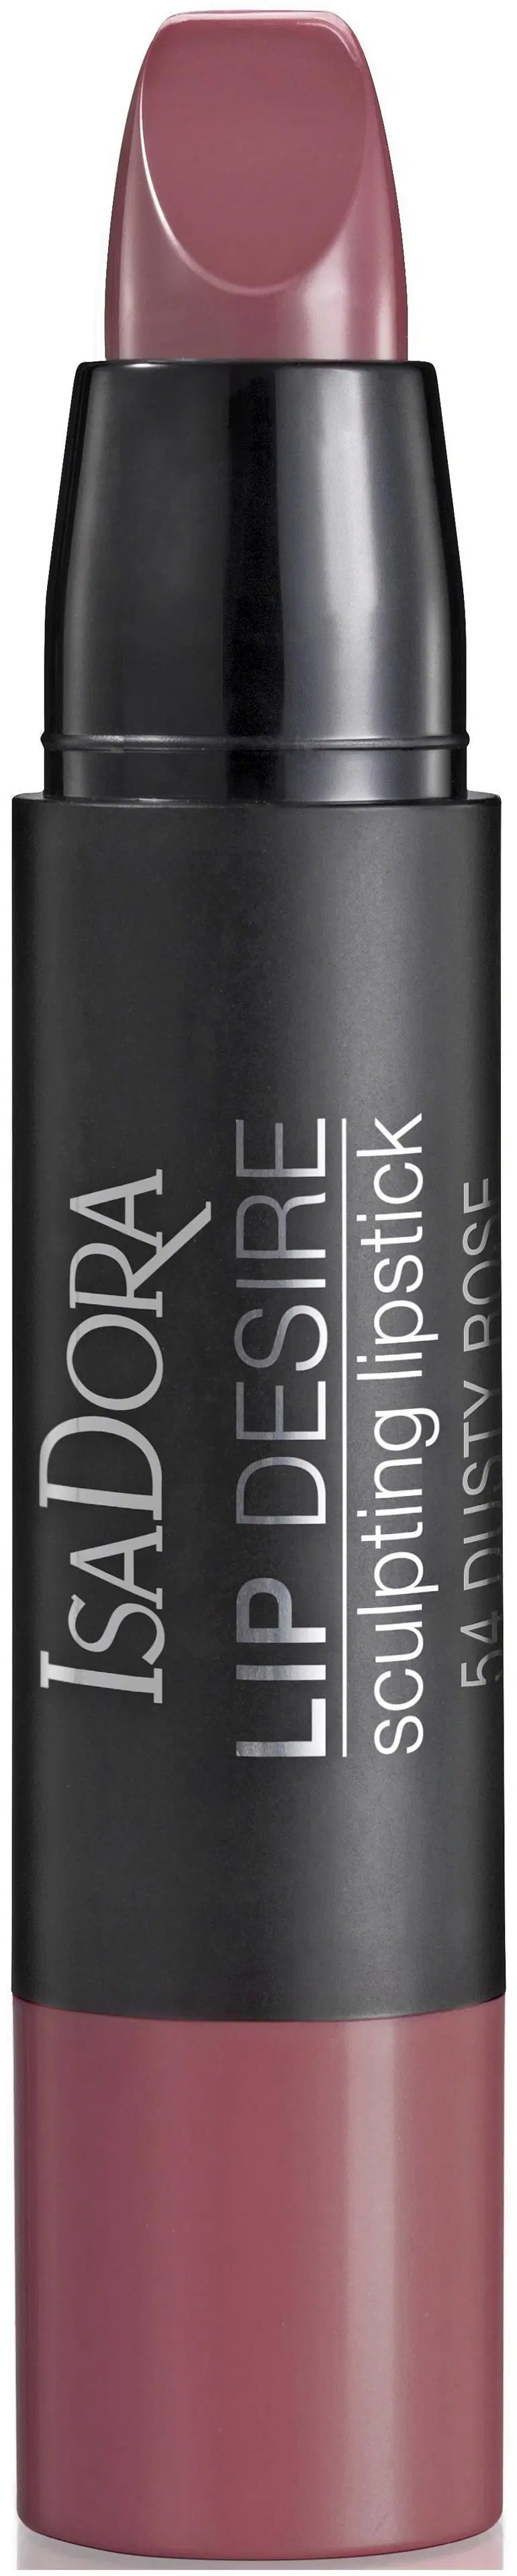 IsaDora Lip Desire Sculpting lipstick 3,3g 54 Dusty Rose huulipuna